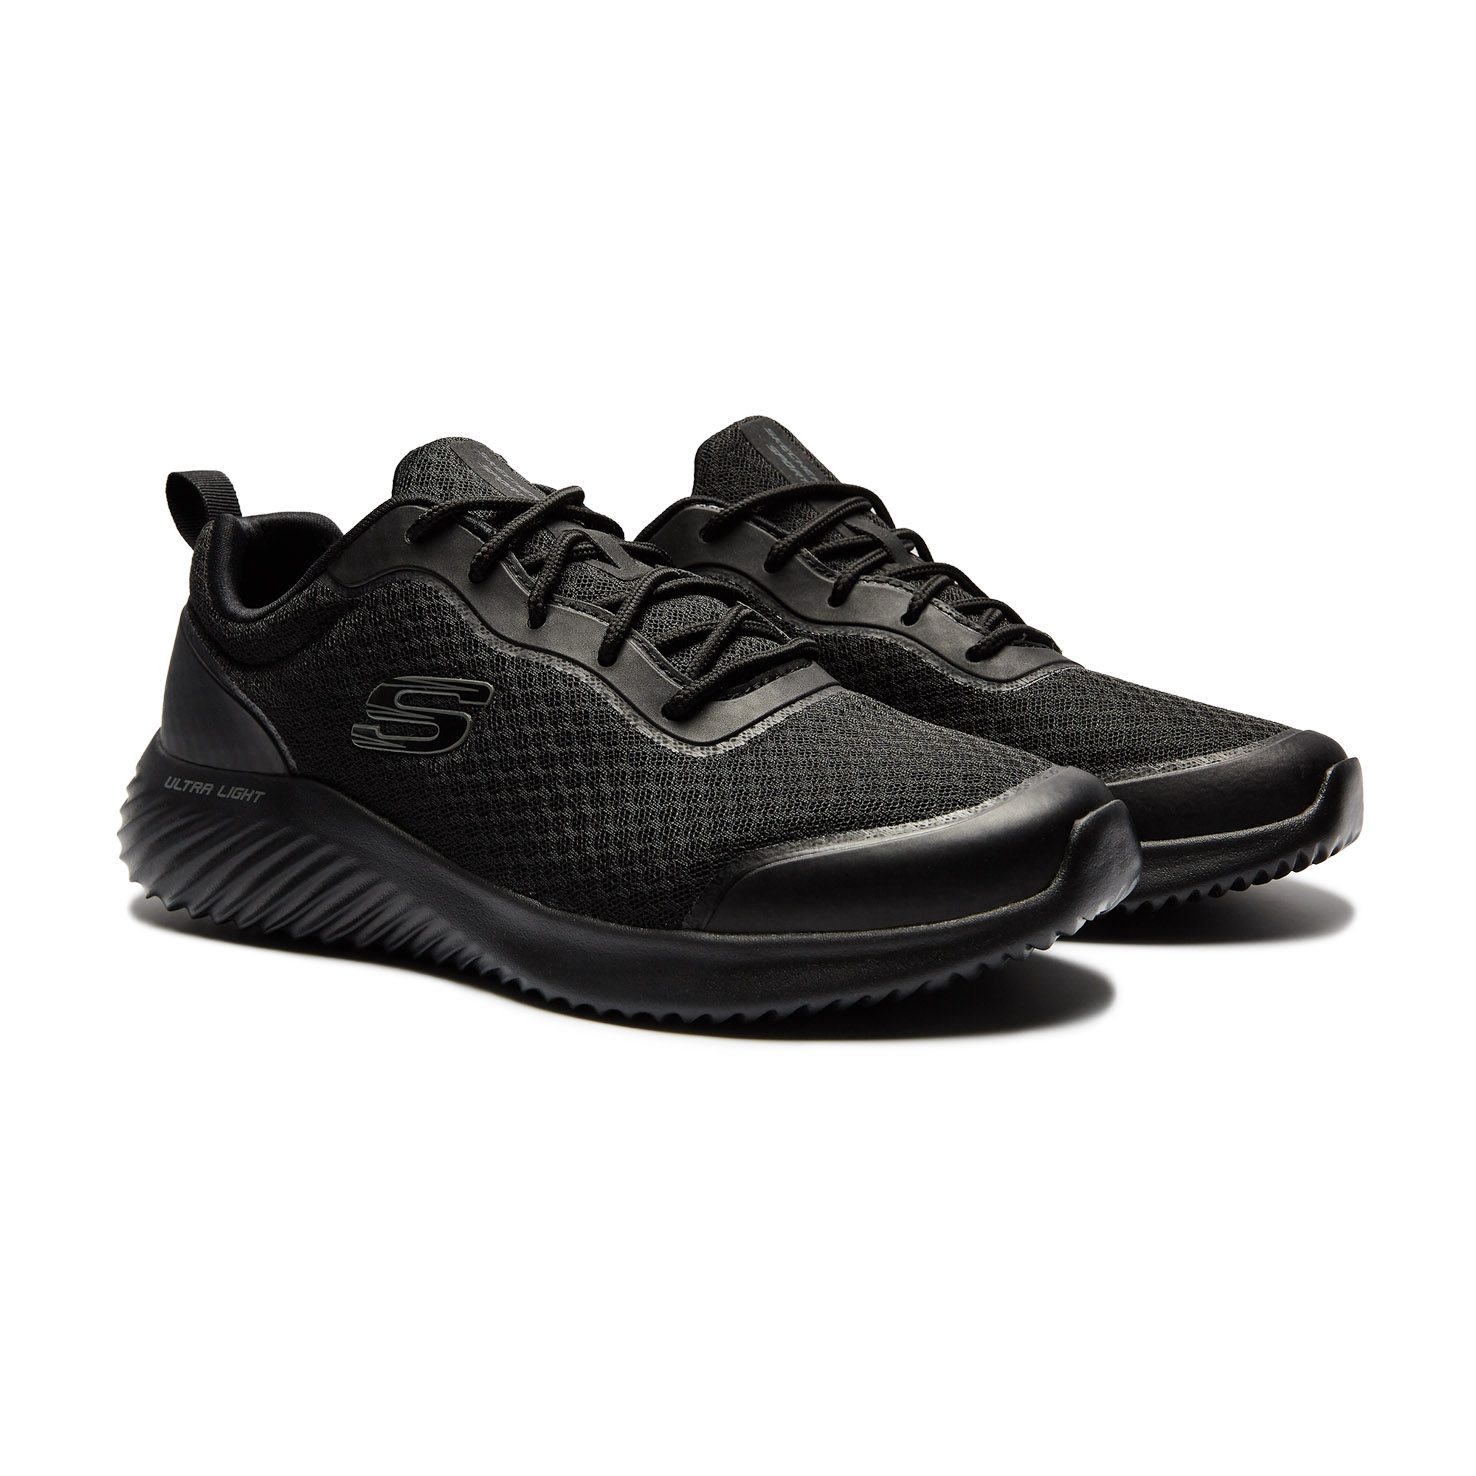 Men's low shoes SKECHERS, размер 40, цвет черный SK232005 - фото 2